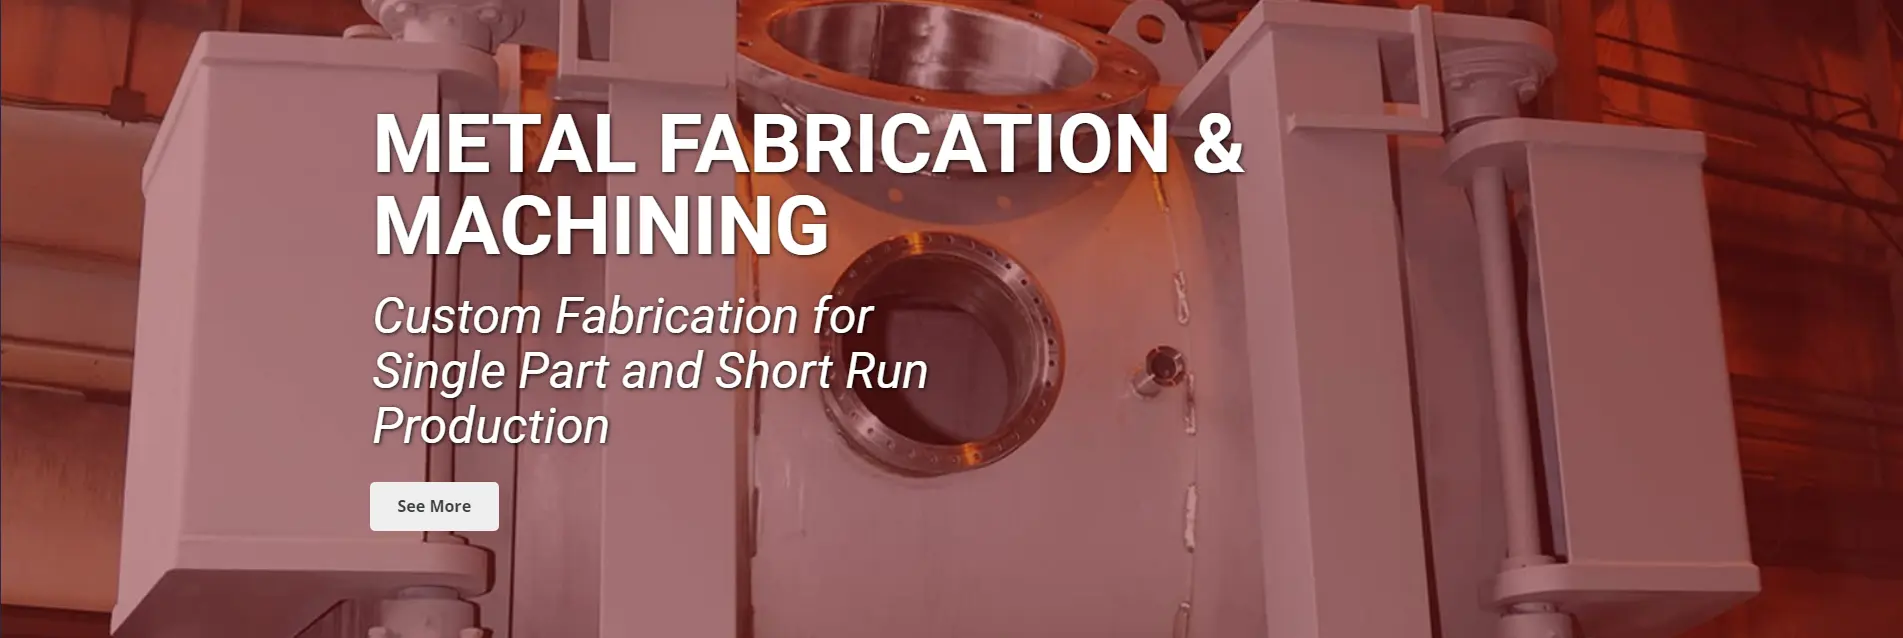 metal fabrication and Machining